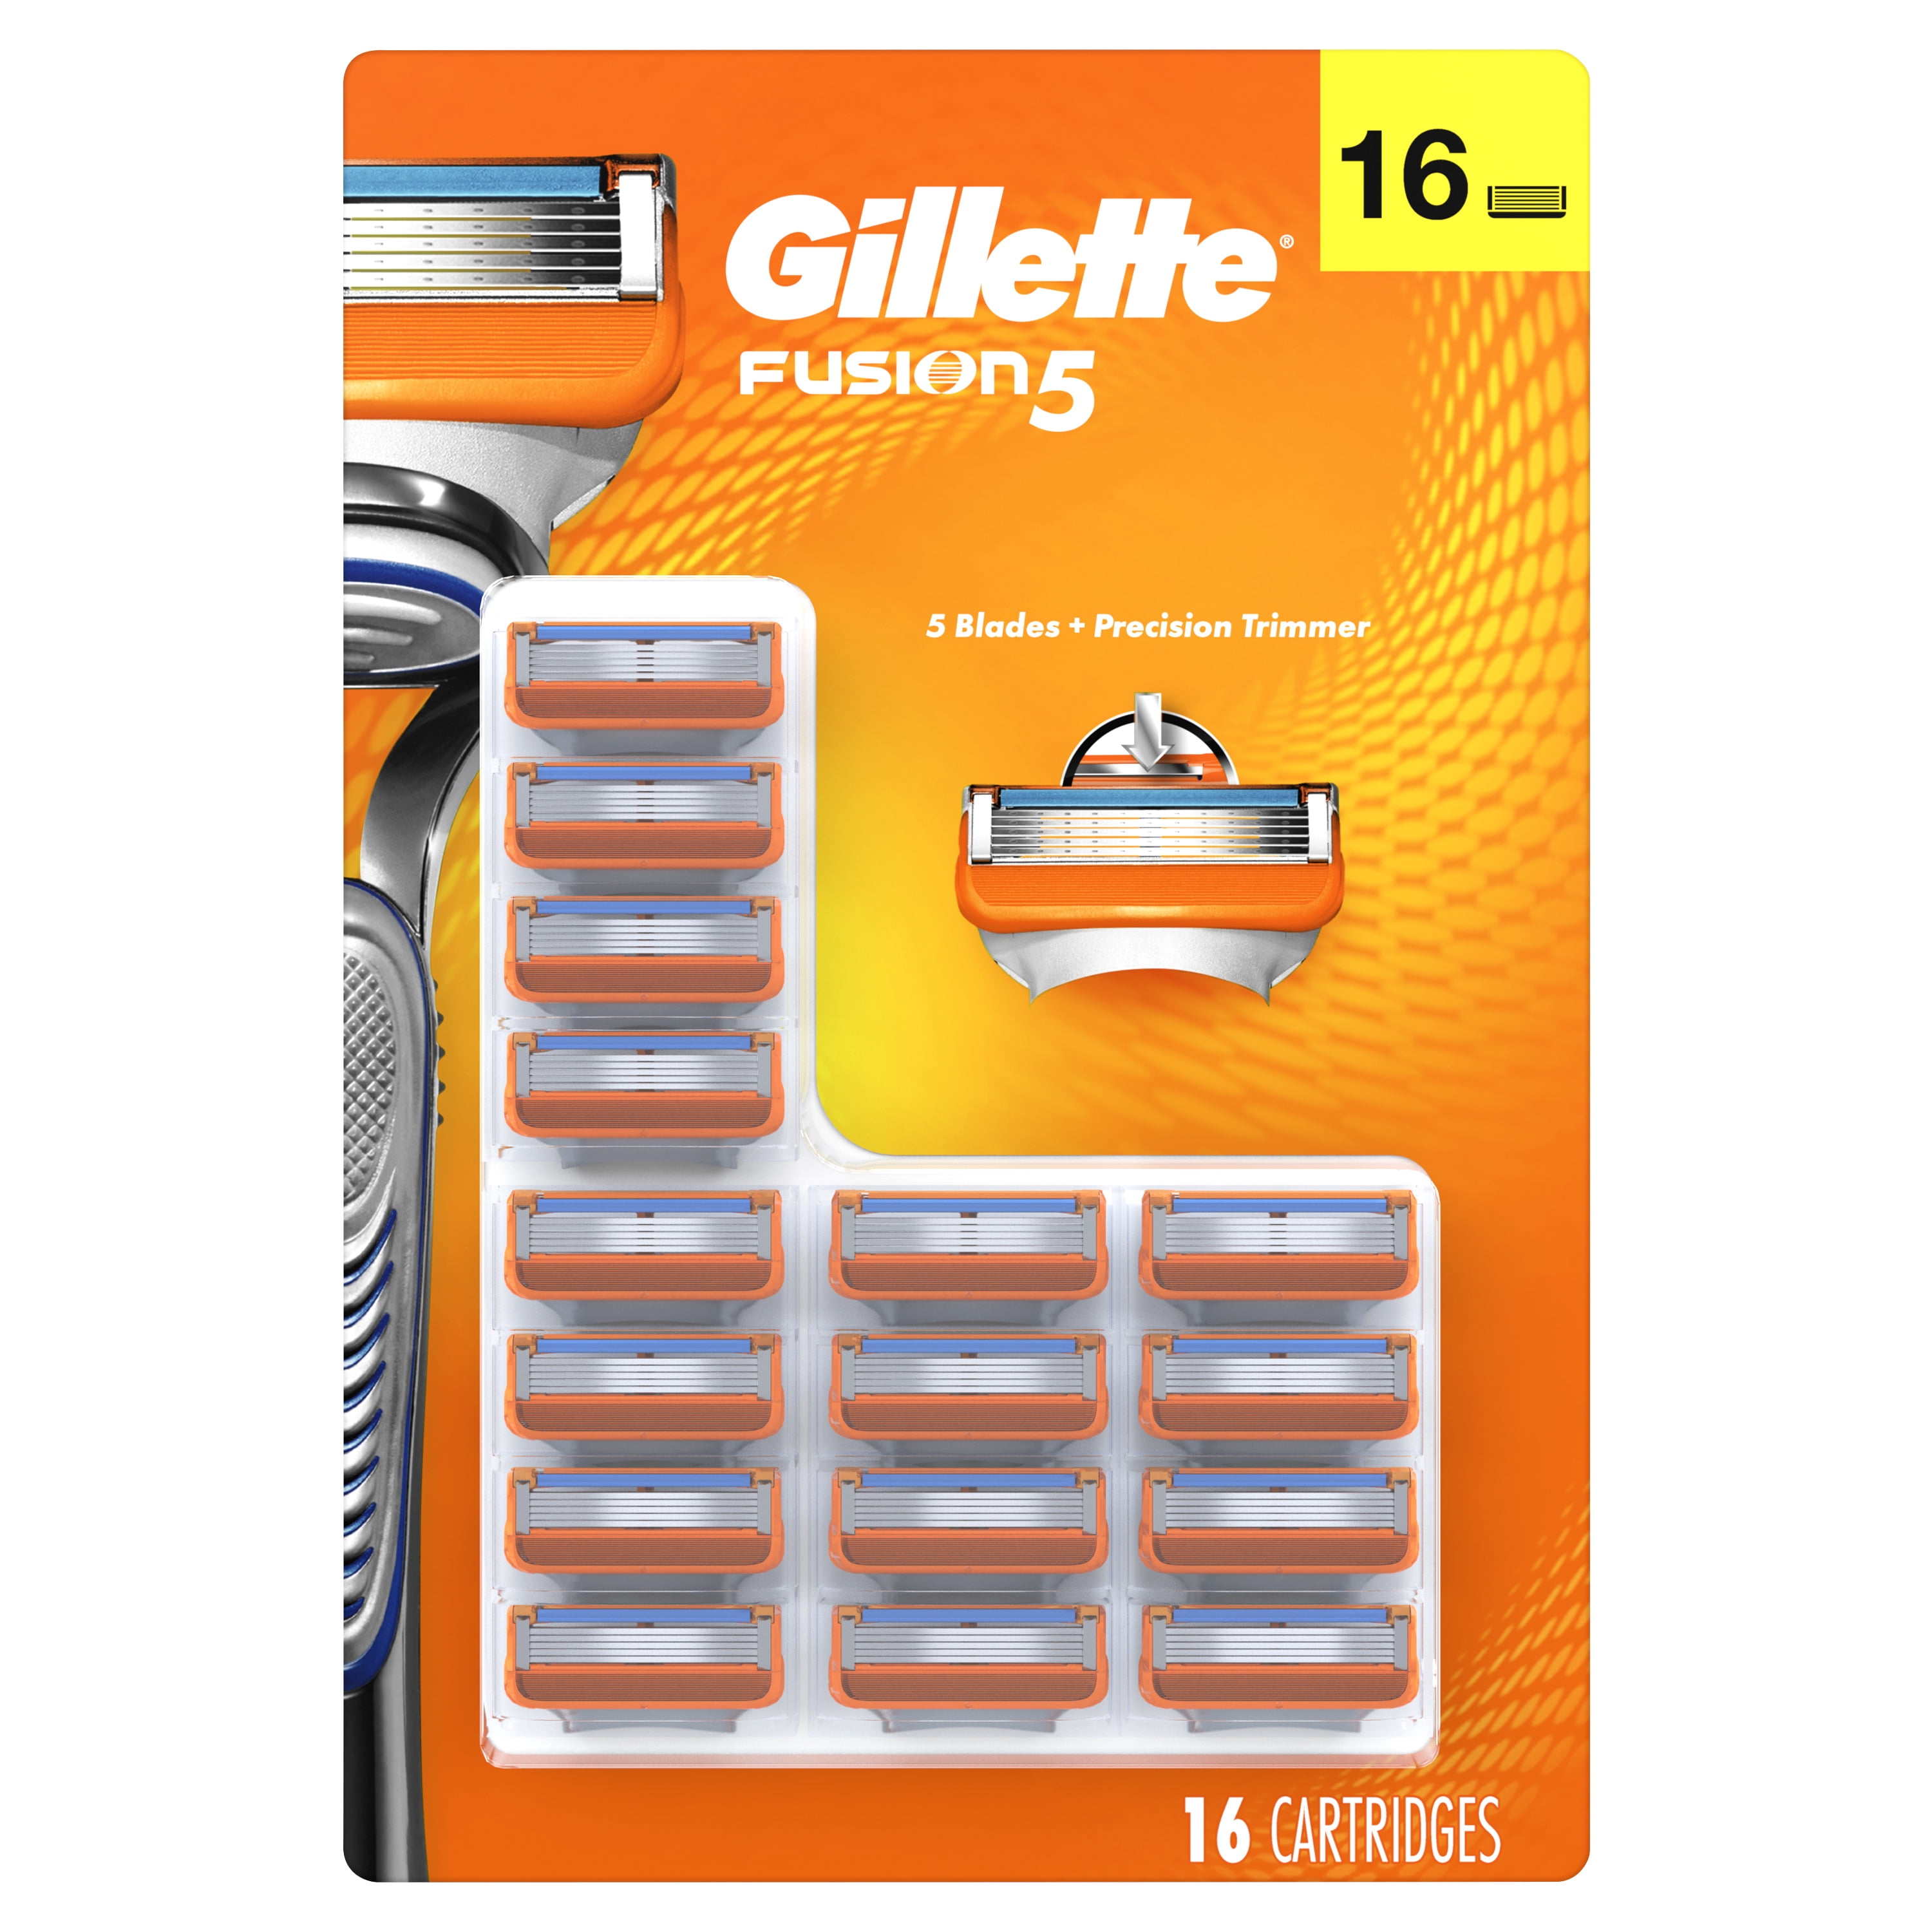 Gillette Fusion Proglide Blades Online Discount Save 49 Jlcatj gob mx